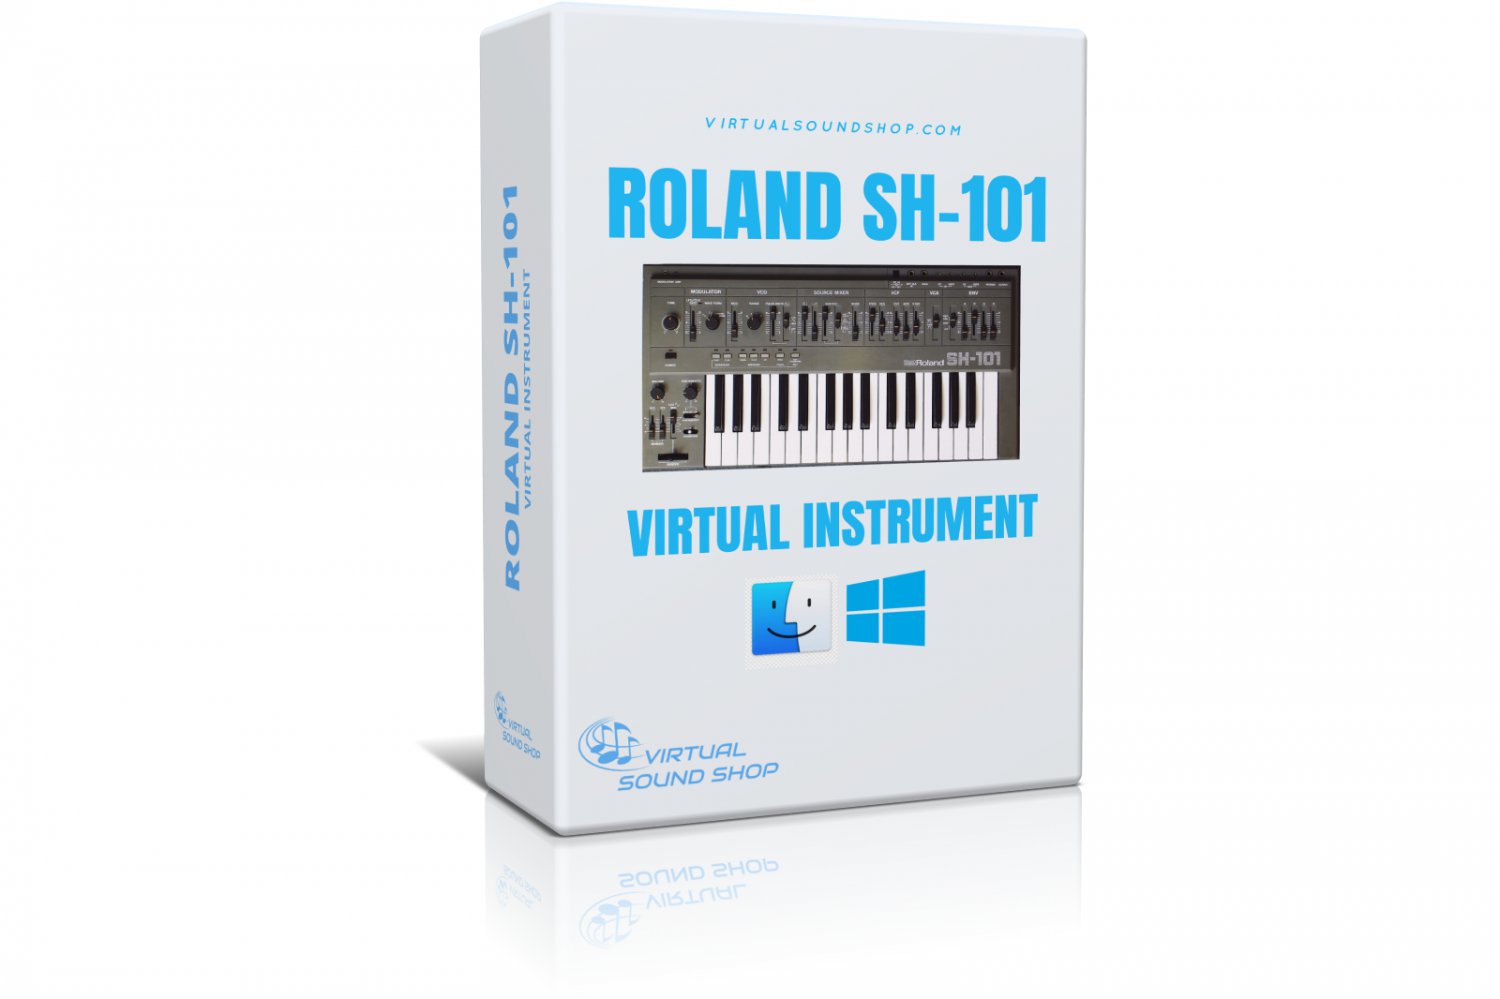 Roland SH-101 Emulation Virtual Instrument VST Synthesizer Software